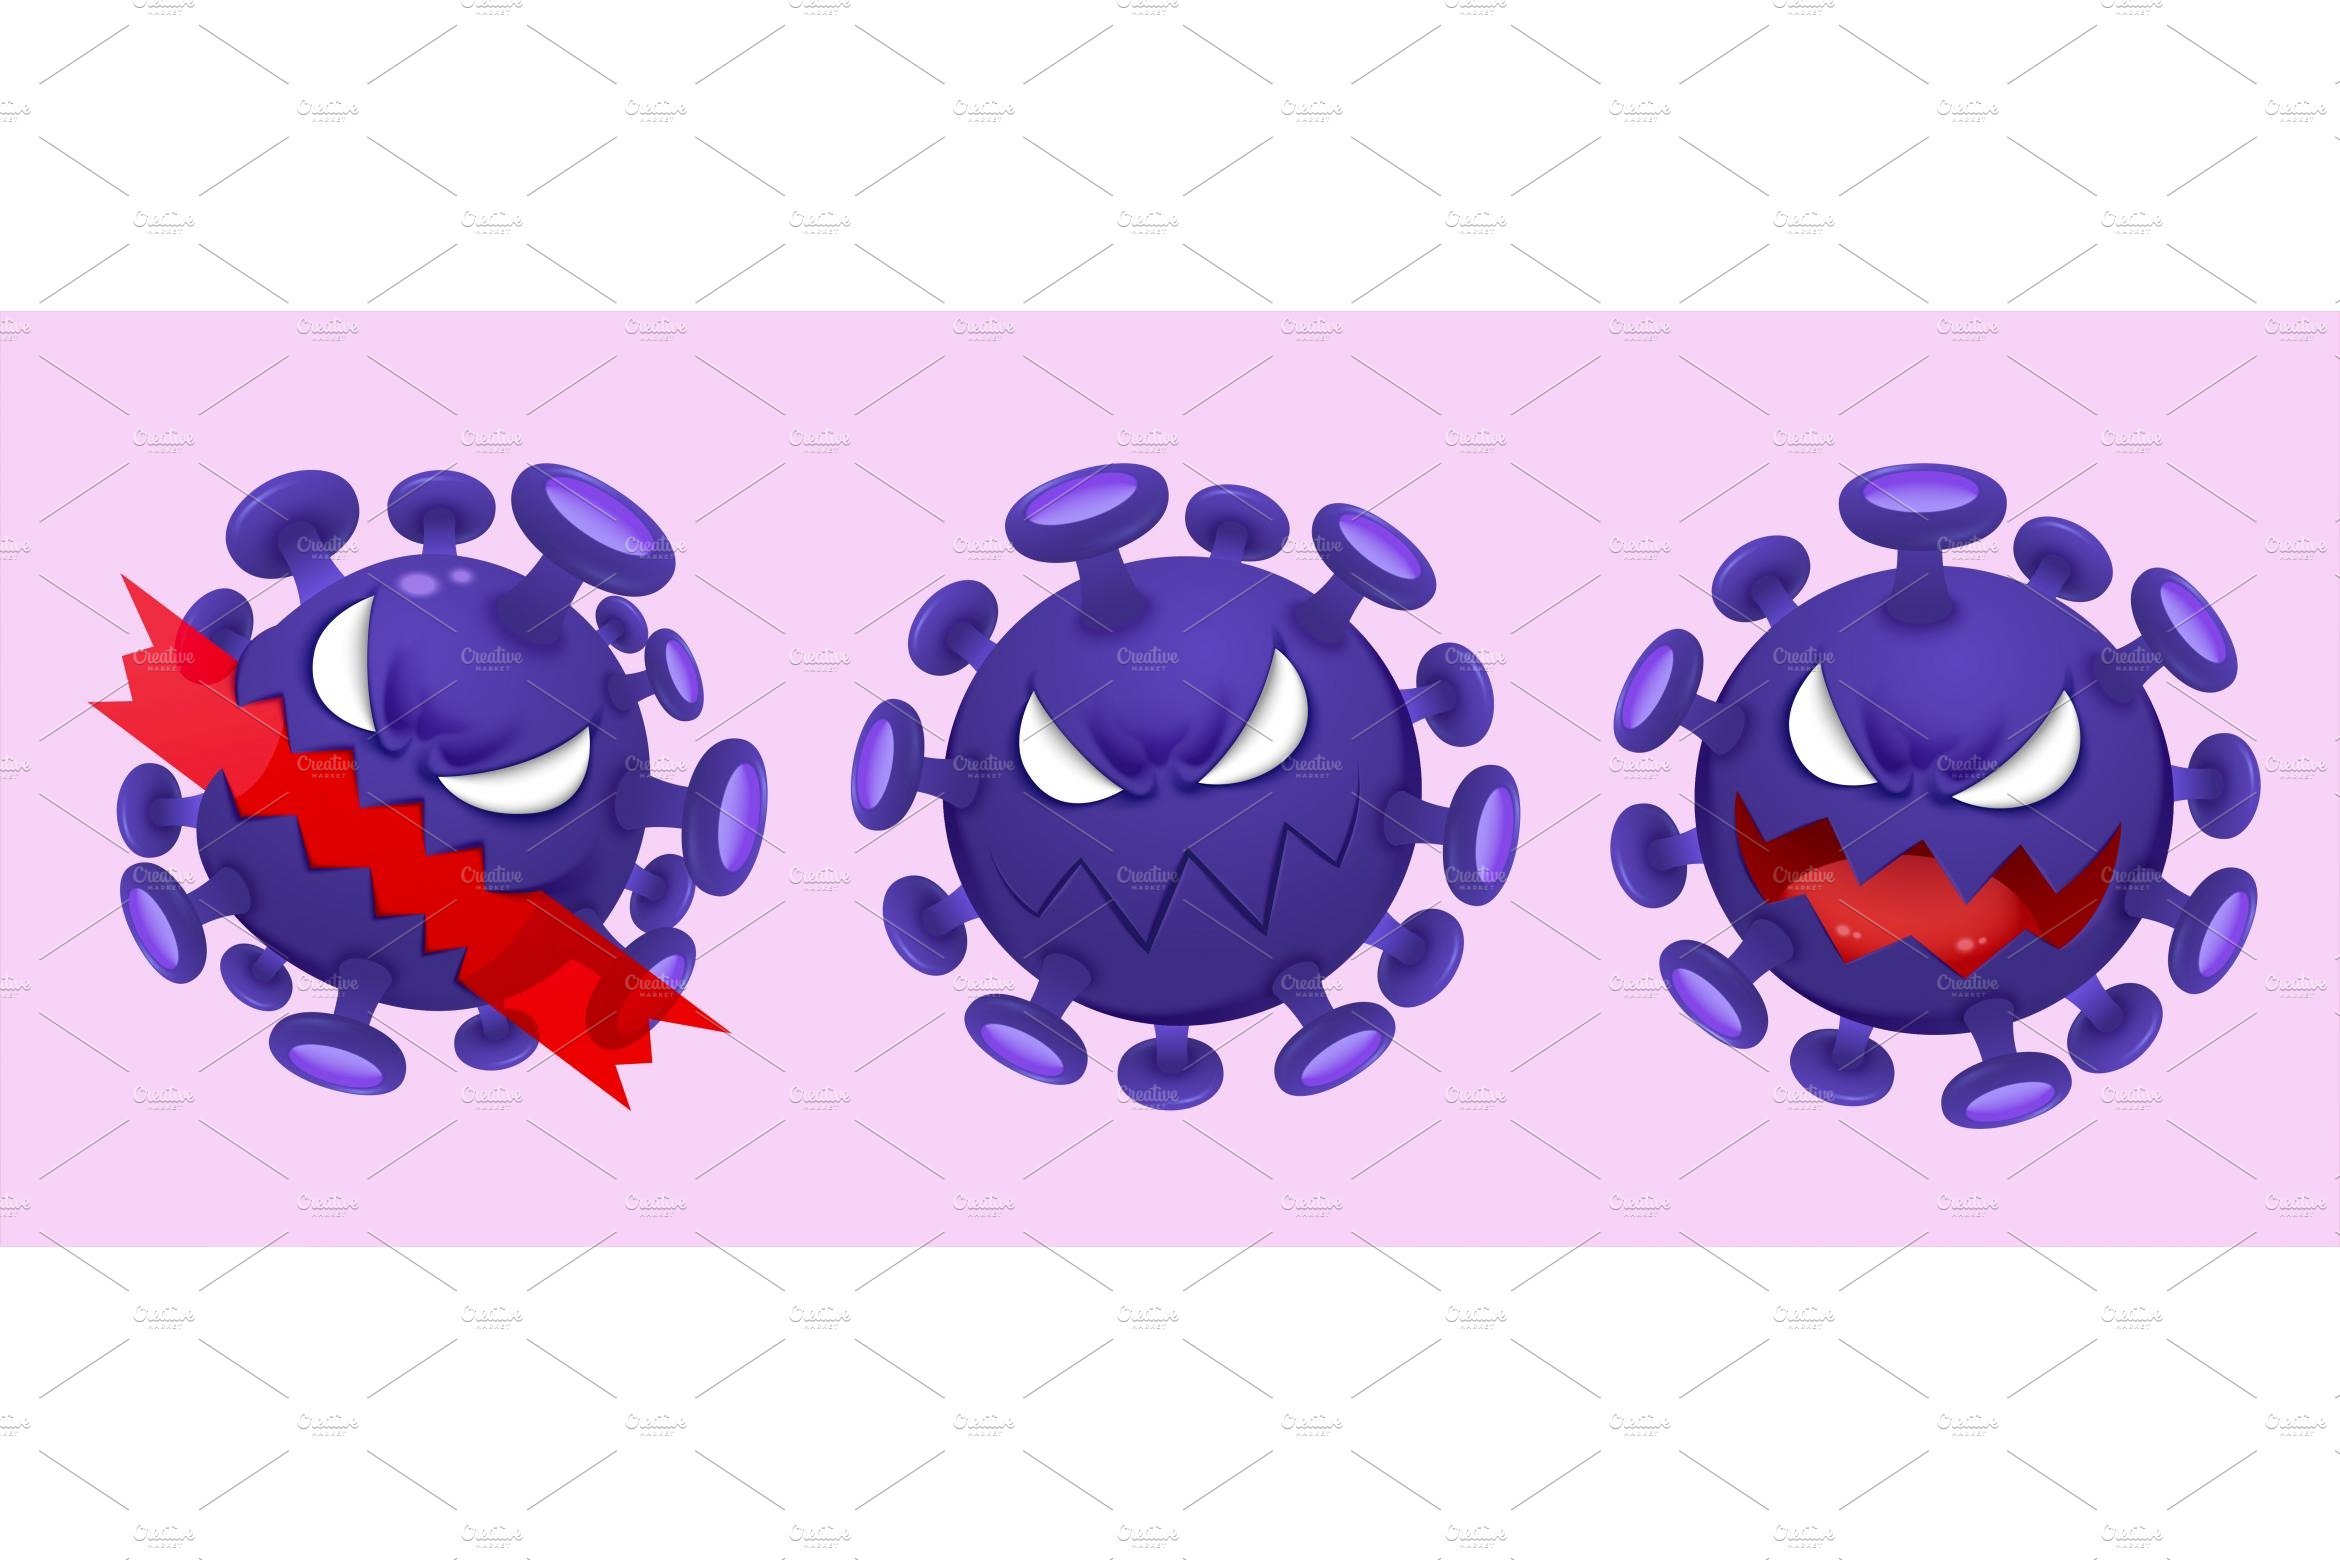 Vicious purple coronavirus cover image.